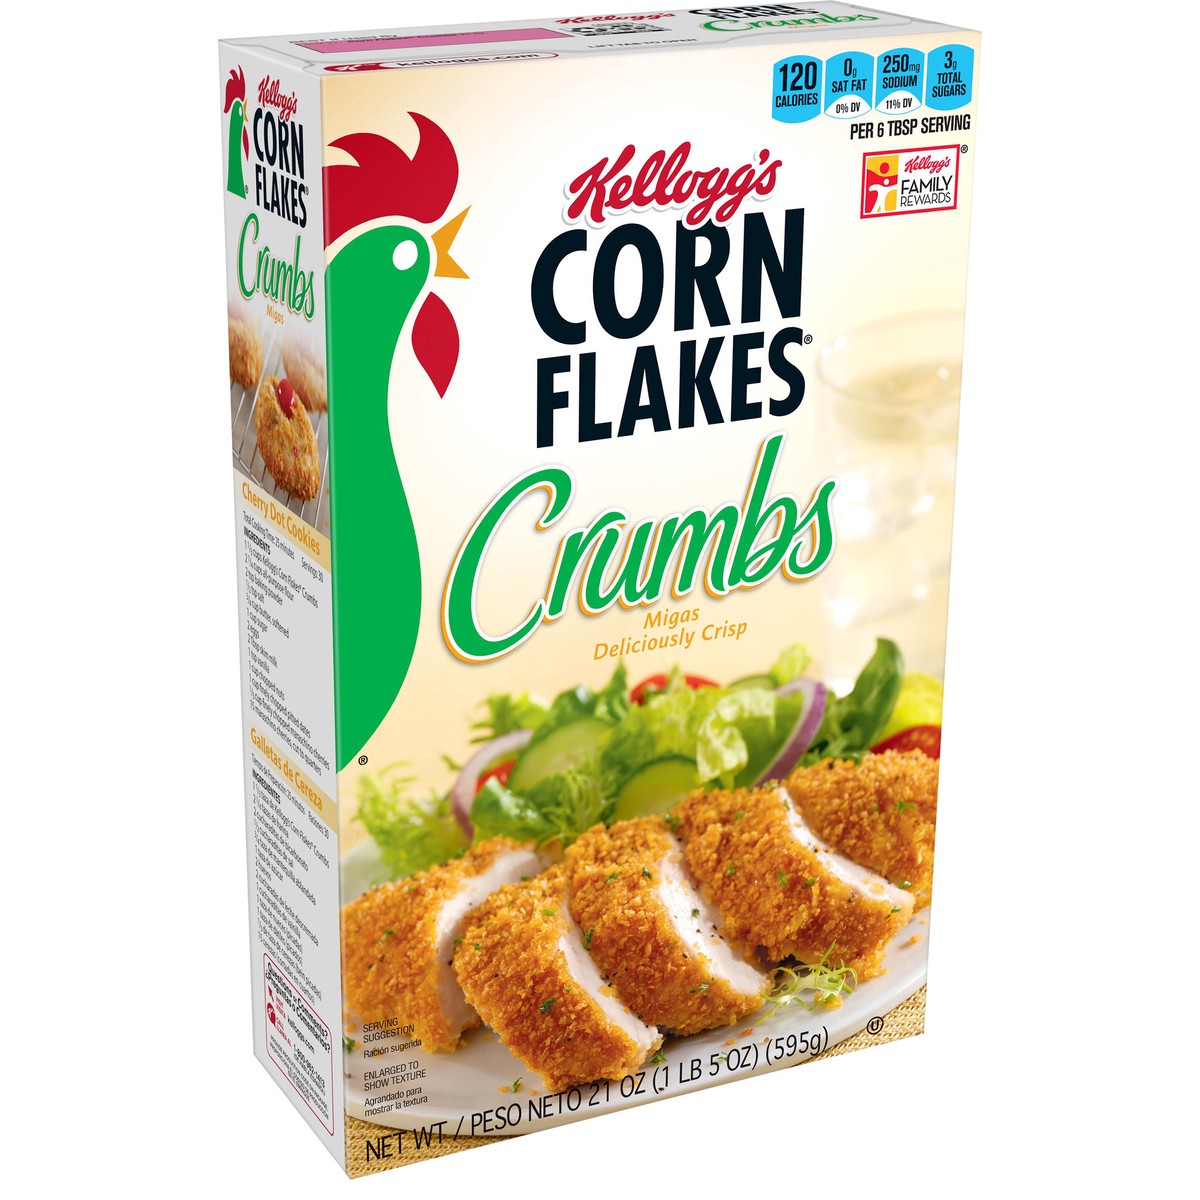 slide 4 of 8, Corn Flakes Kellogg's Corn Flakes Crumbs, 8 Vitamins and Minerals, Try in Recipes, Original, 21oz Box, 1 Box, 21 oz